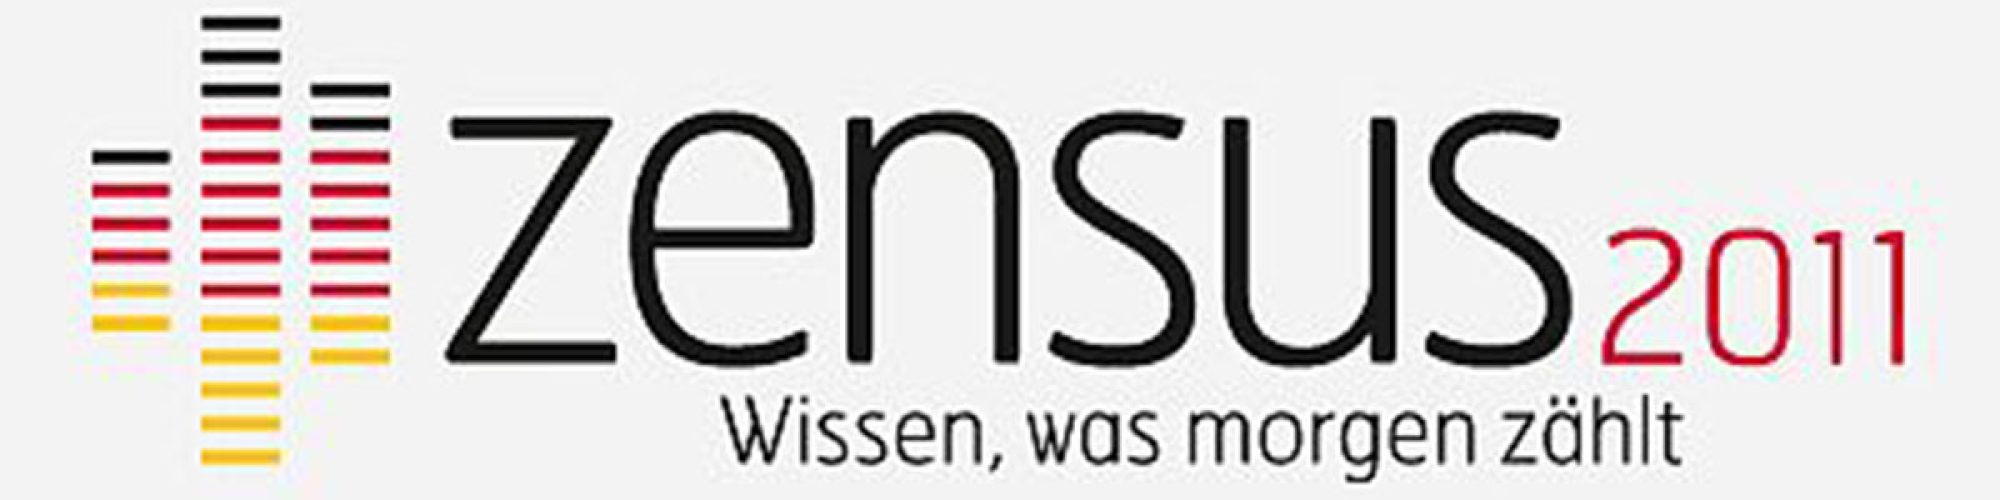 zensus_2011_logo